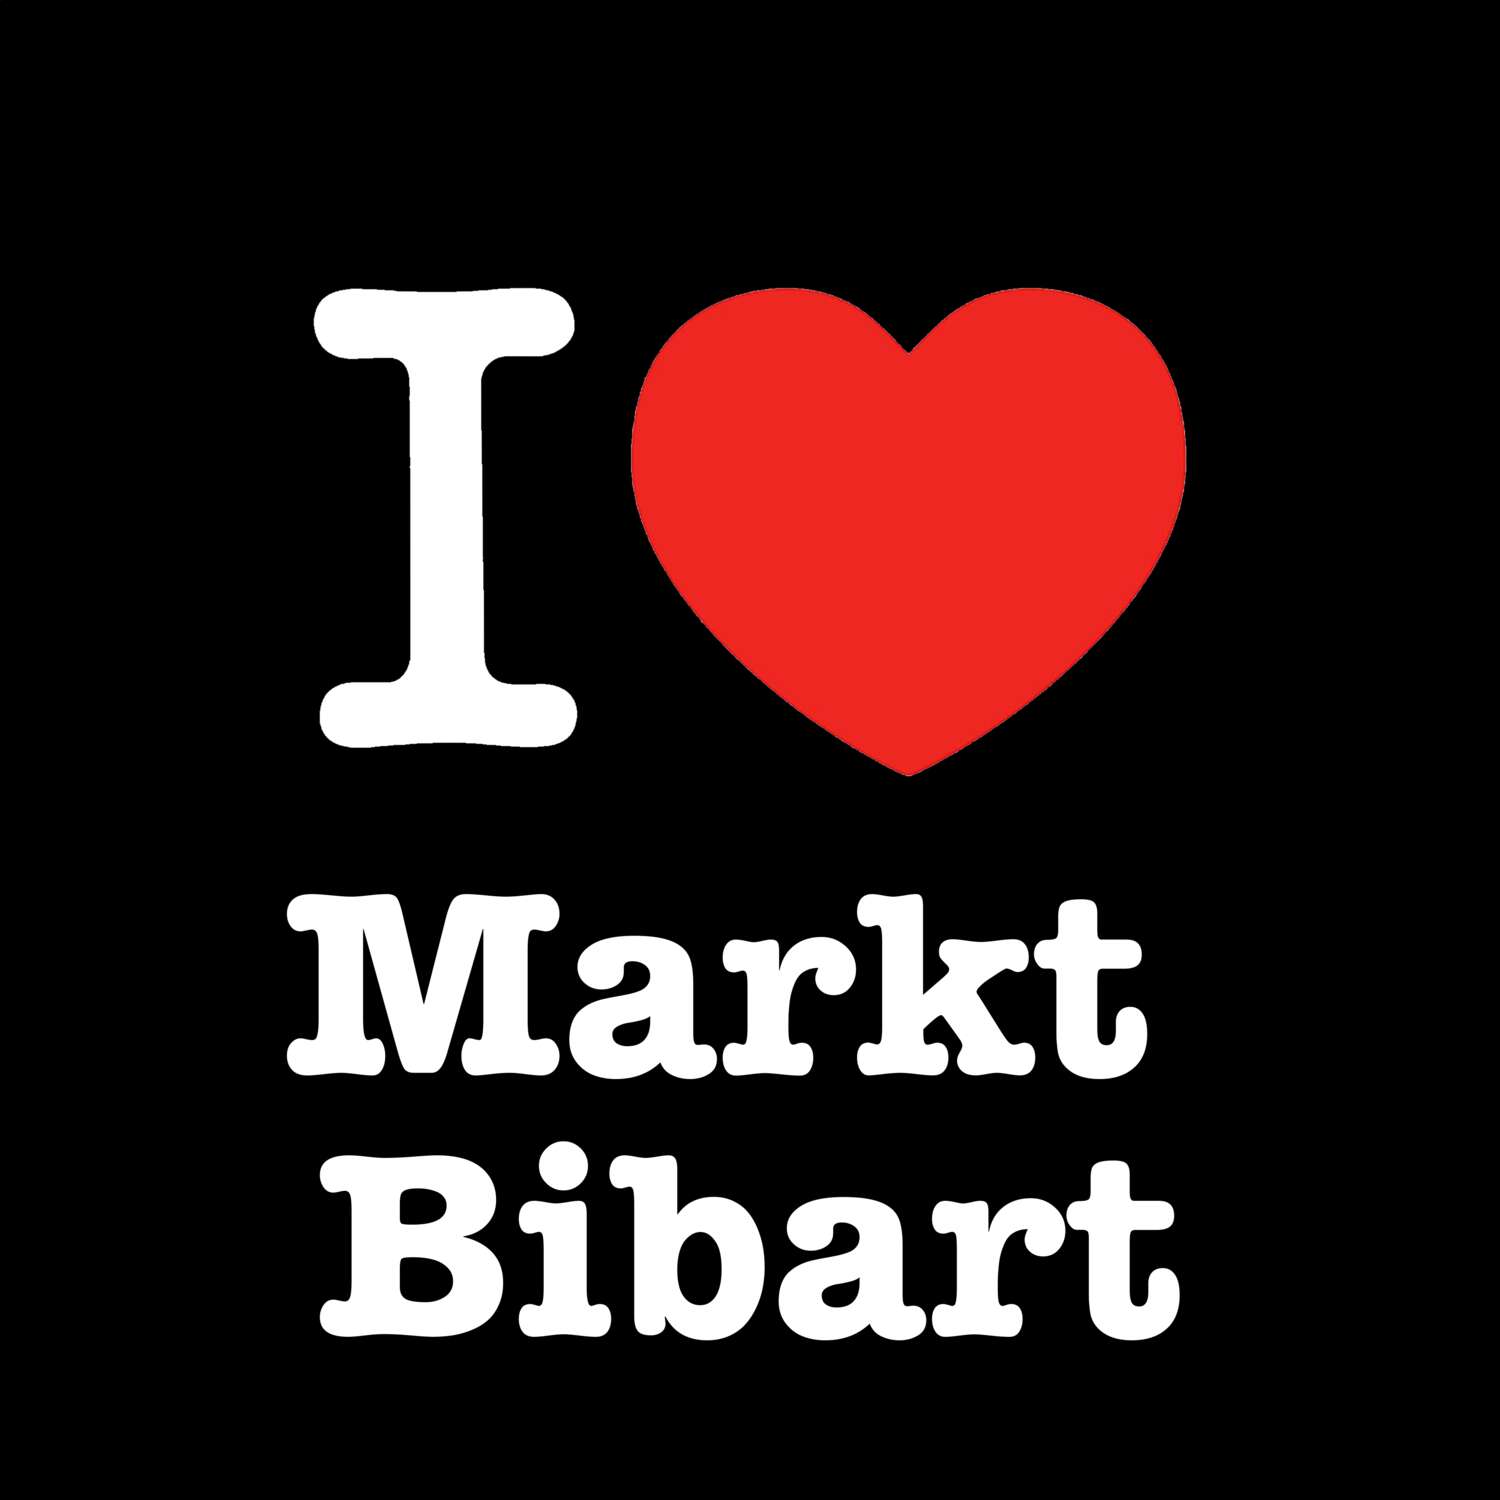 Markt Bibart T-Shirt »I love«